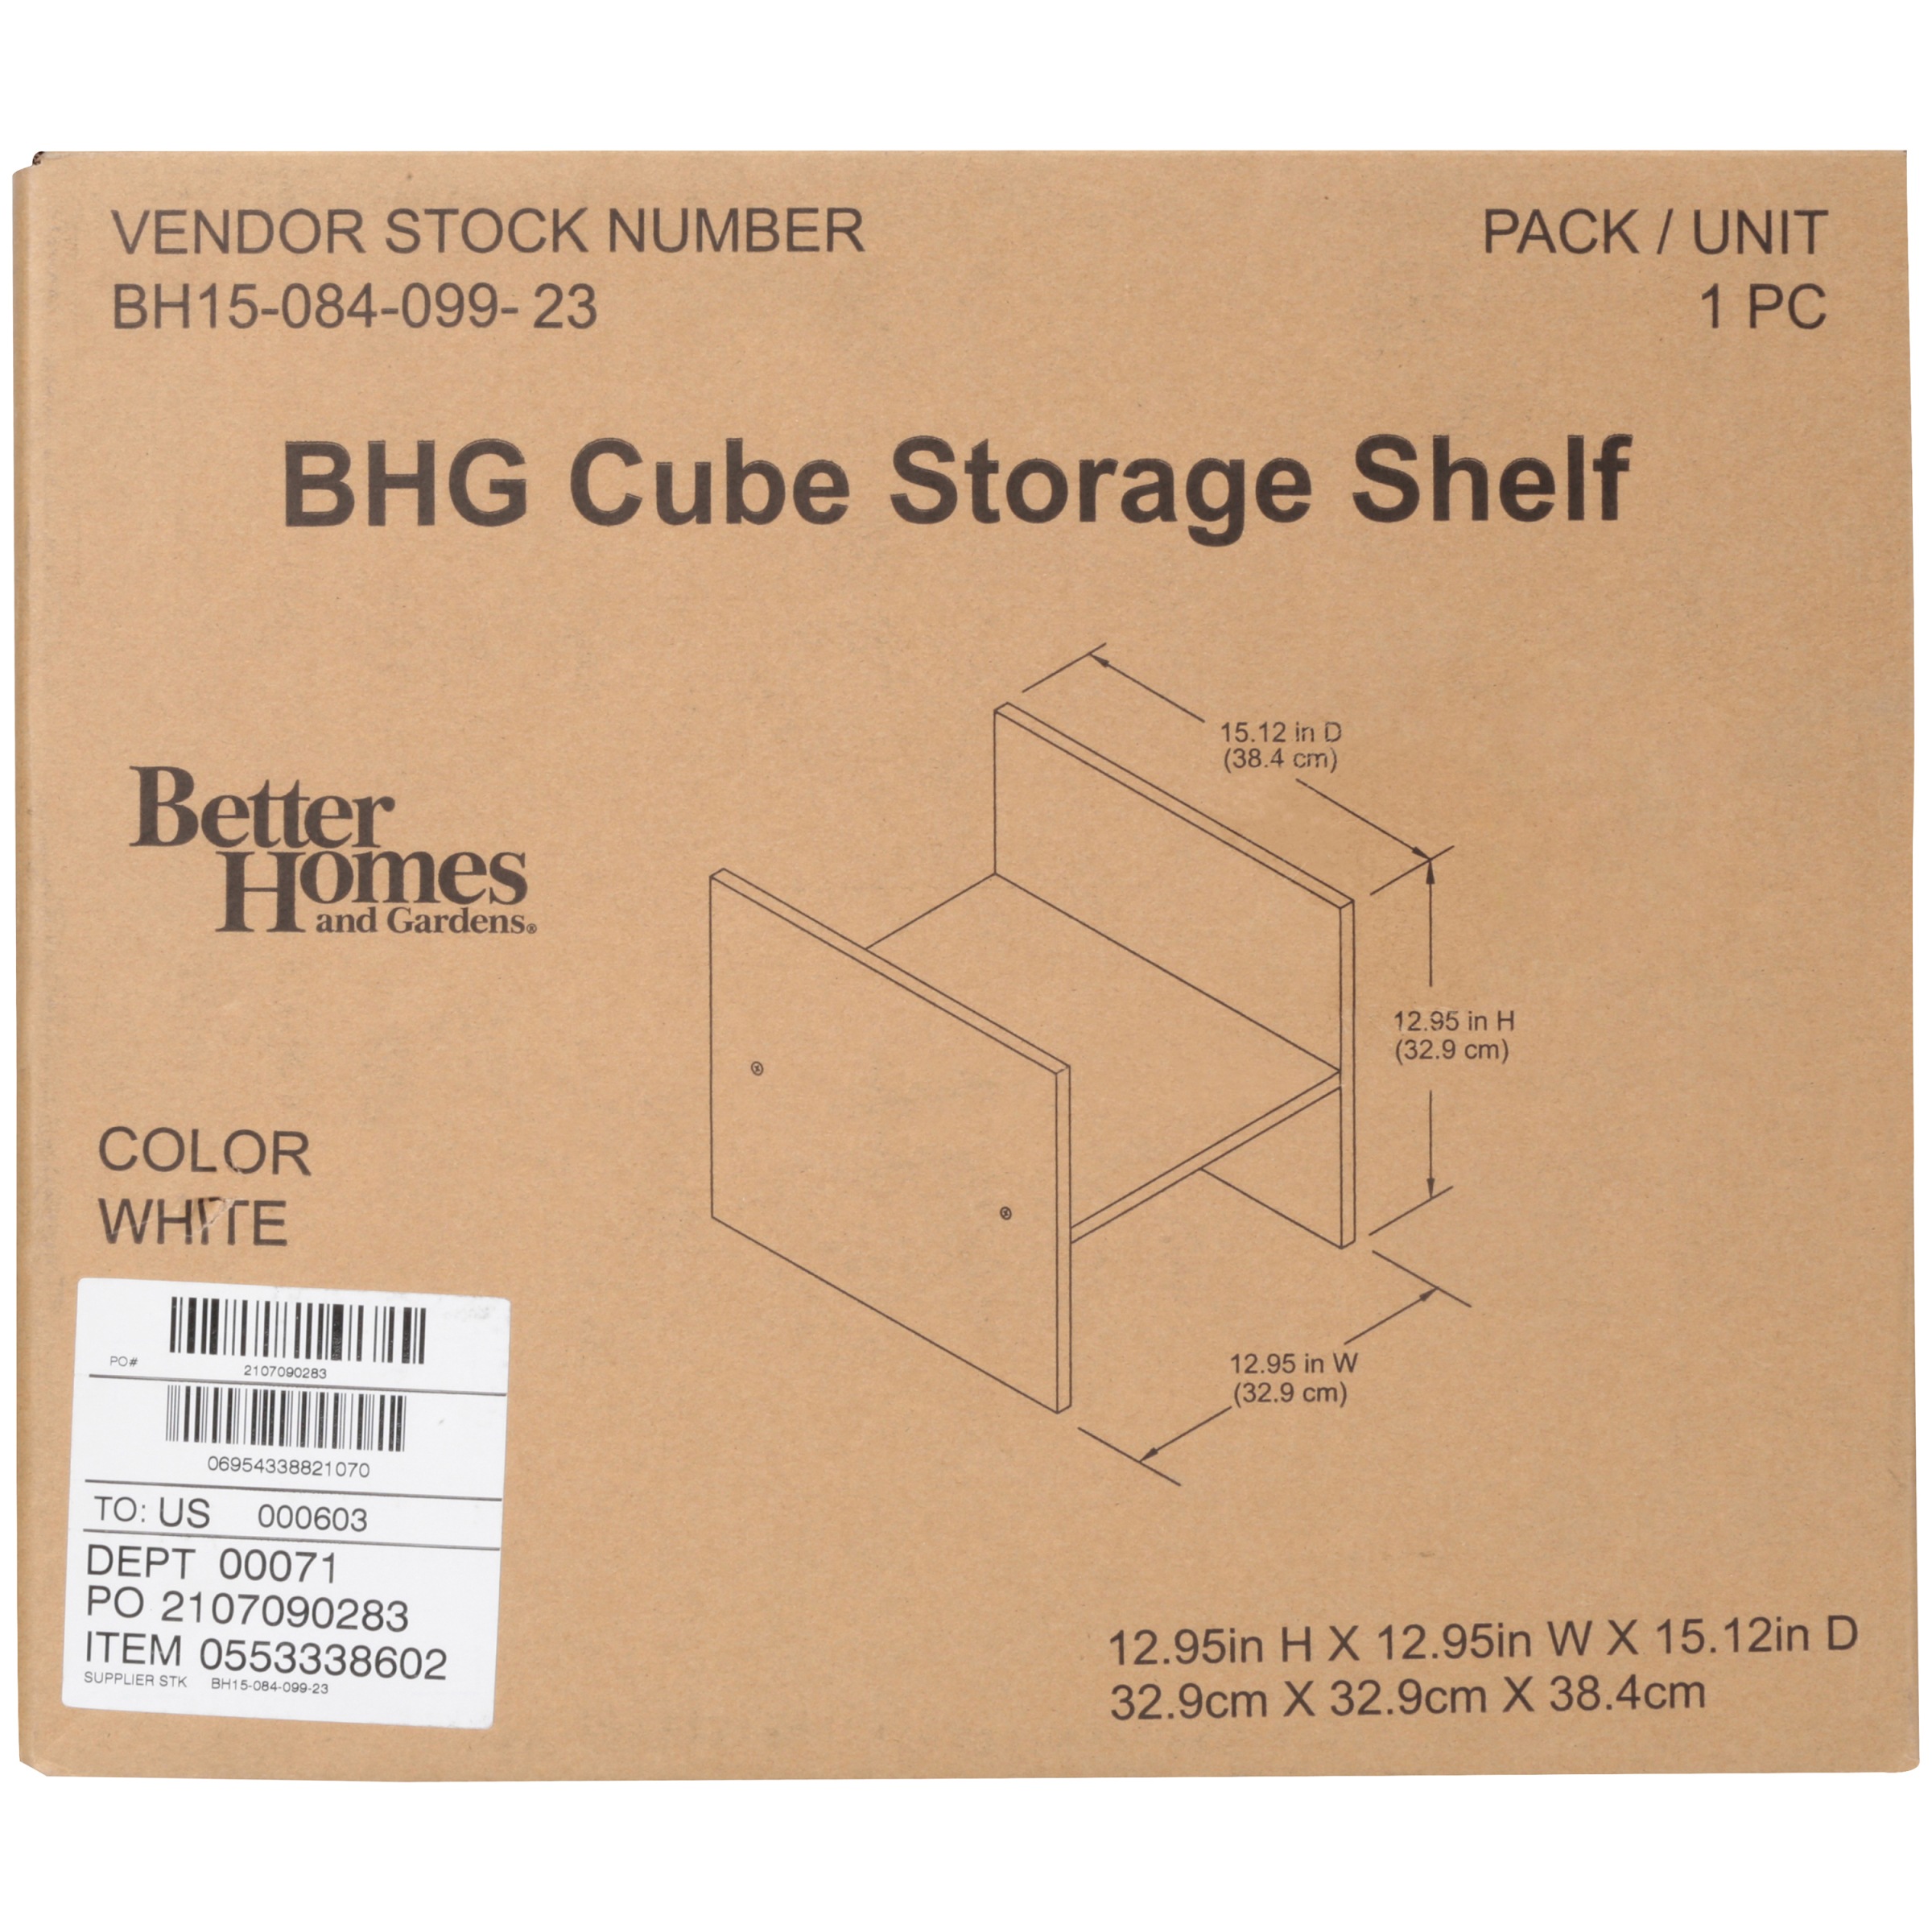 Better Homes & Gardens Cube Storage H Shelf, White - image 4 of 4